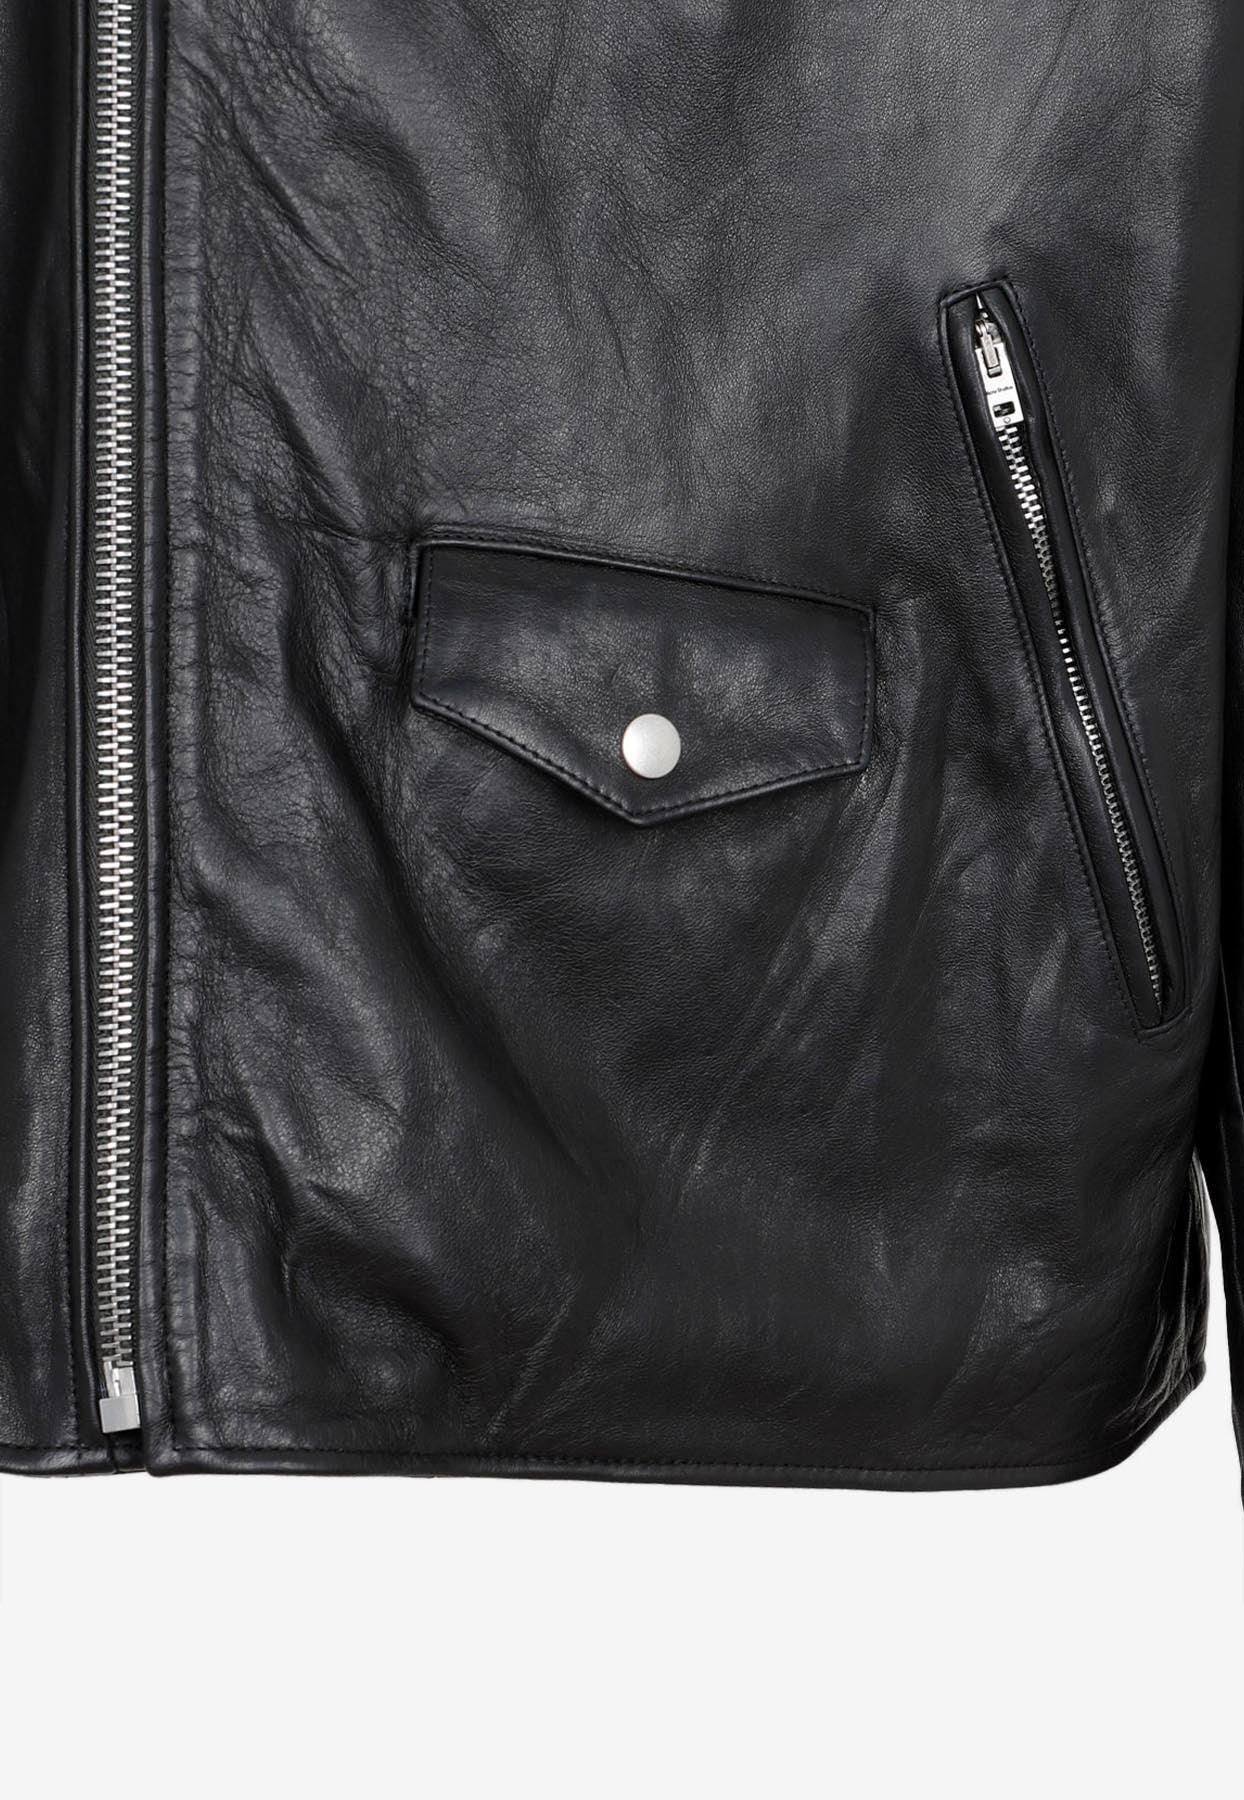 Acne Studios - Distressed leather jacket - Black